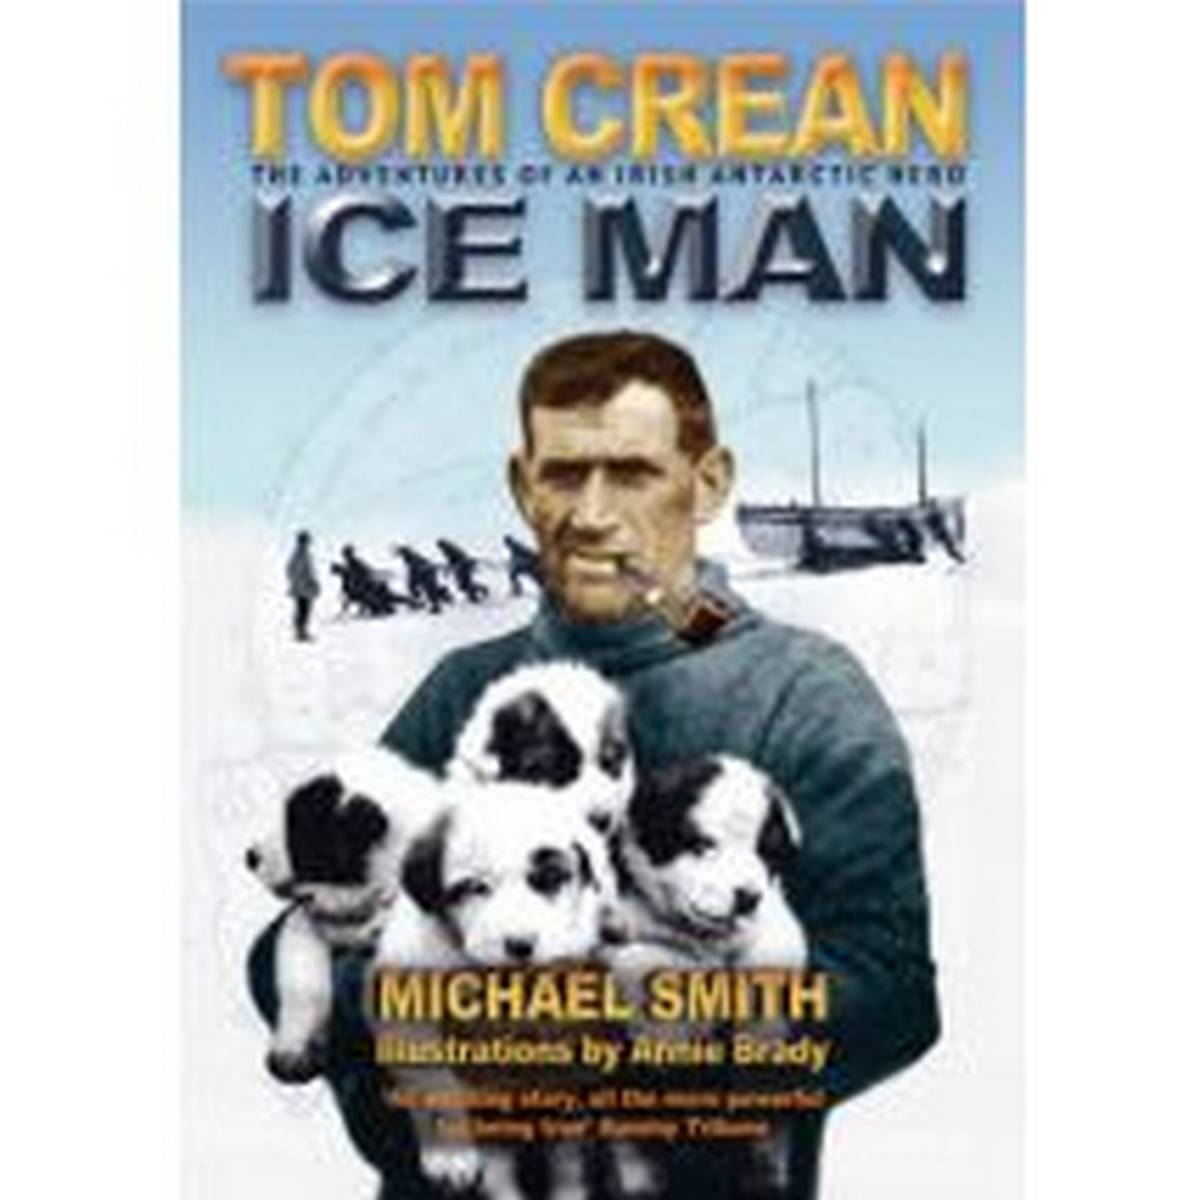 Ice Man (Tom Crean)